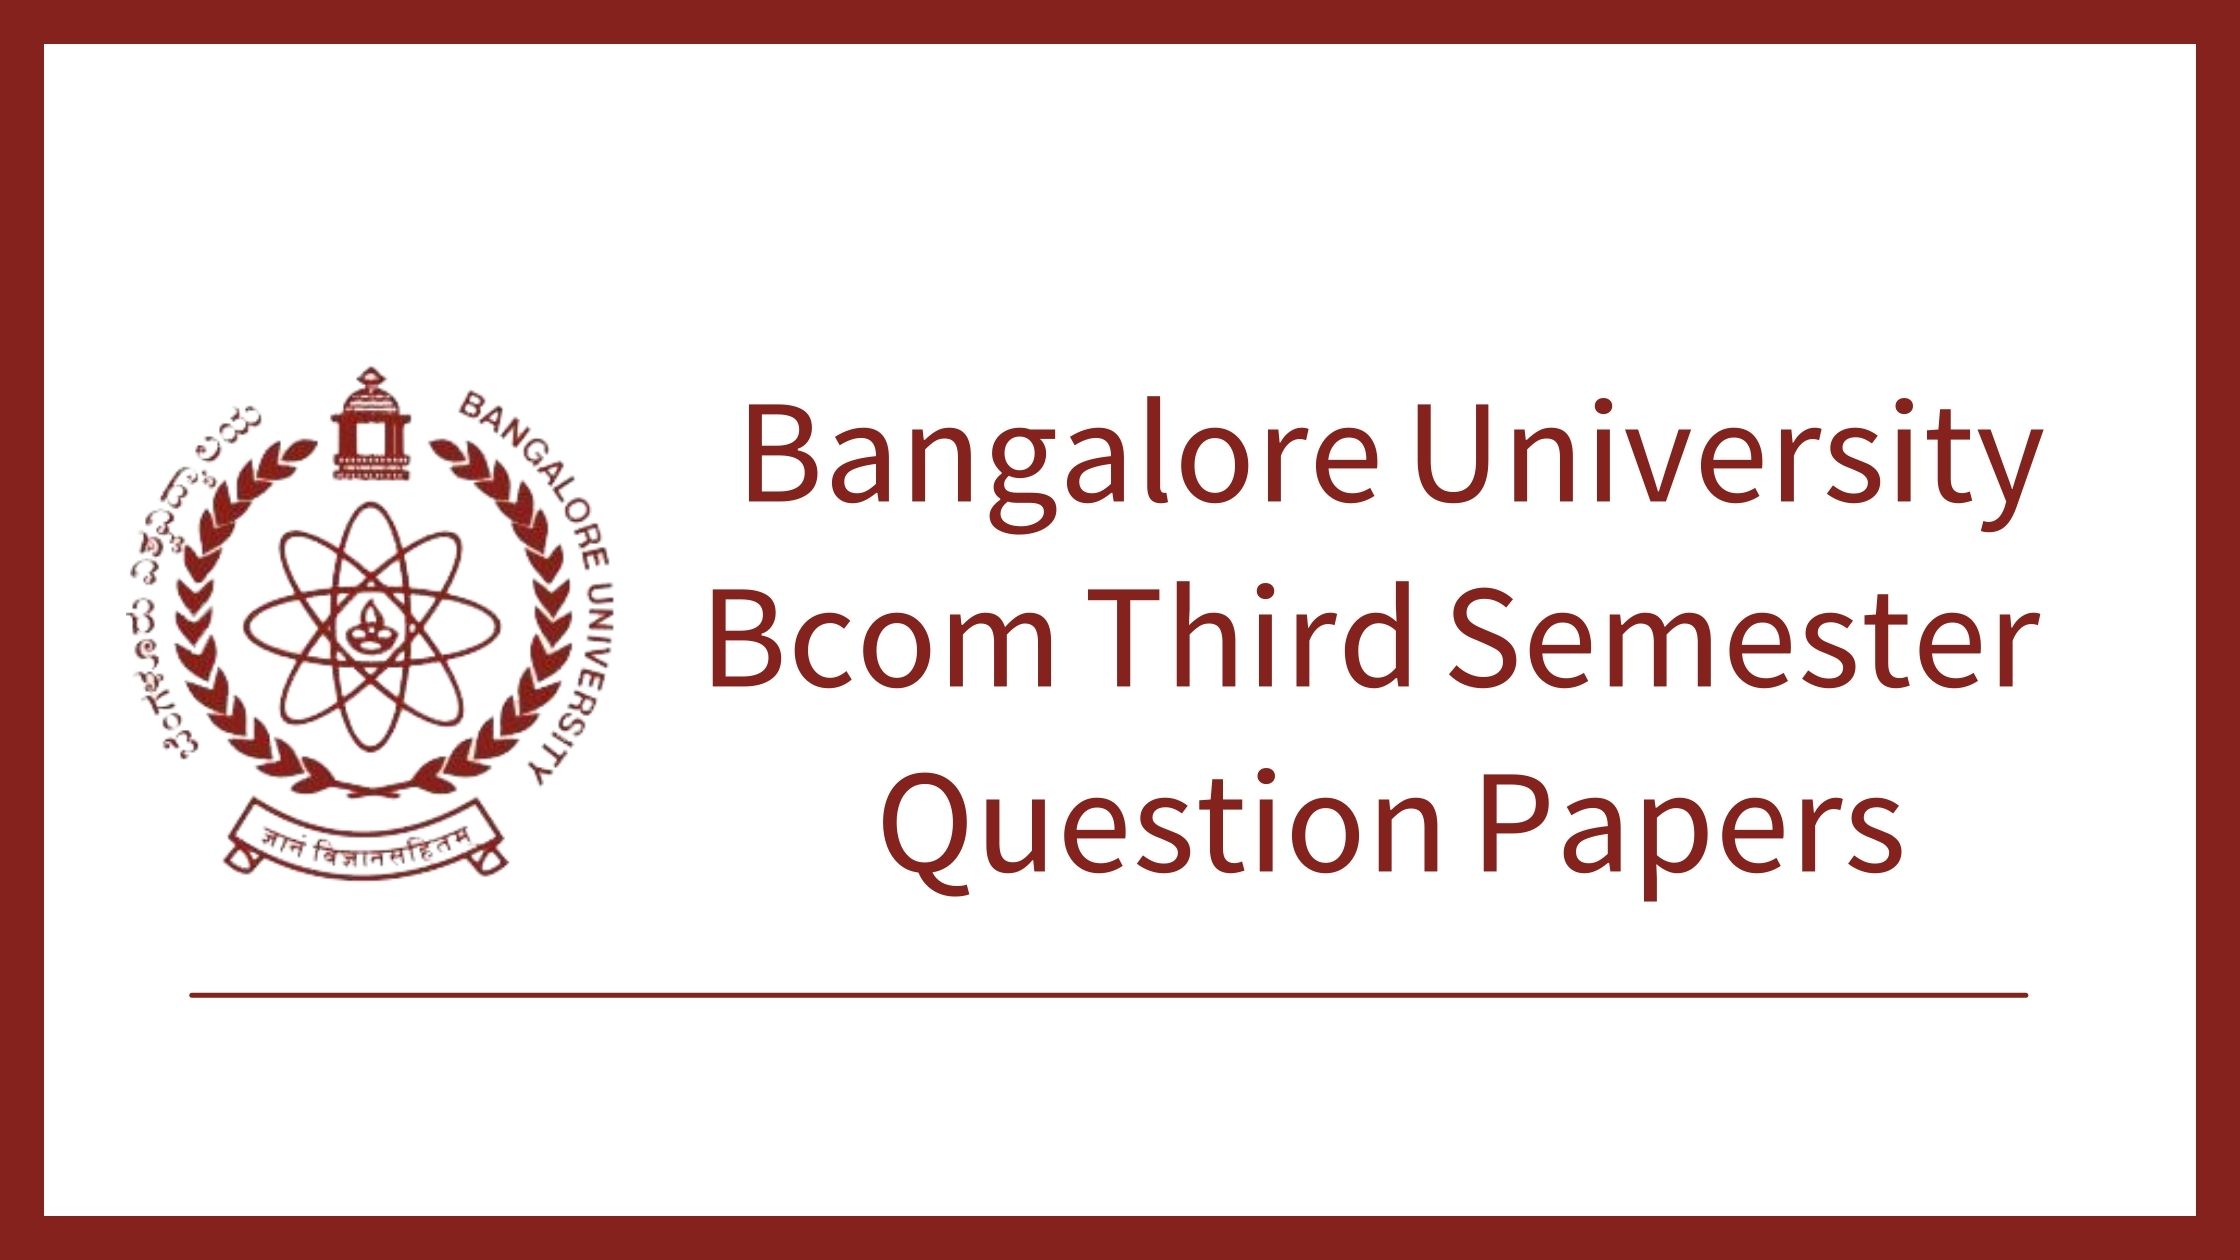 BCom Third Semester Previous Question Paper of Bangalore University